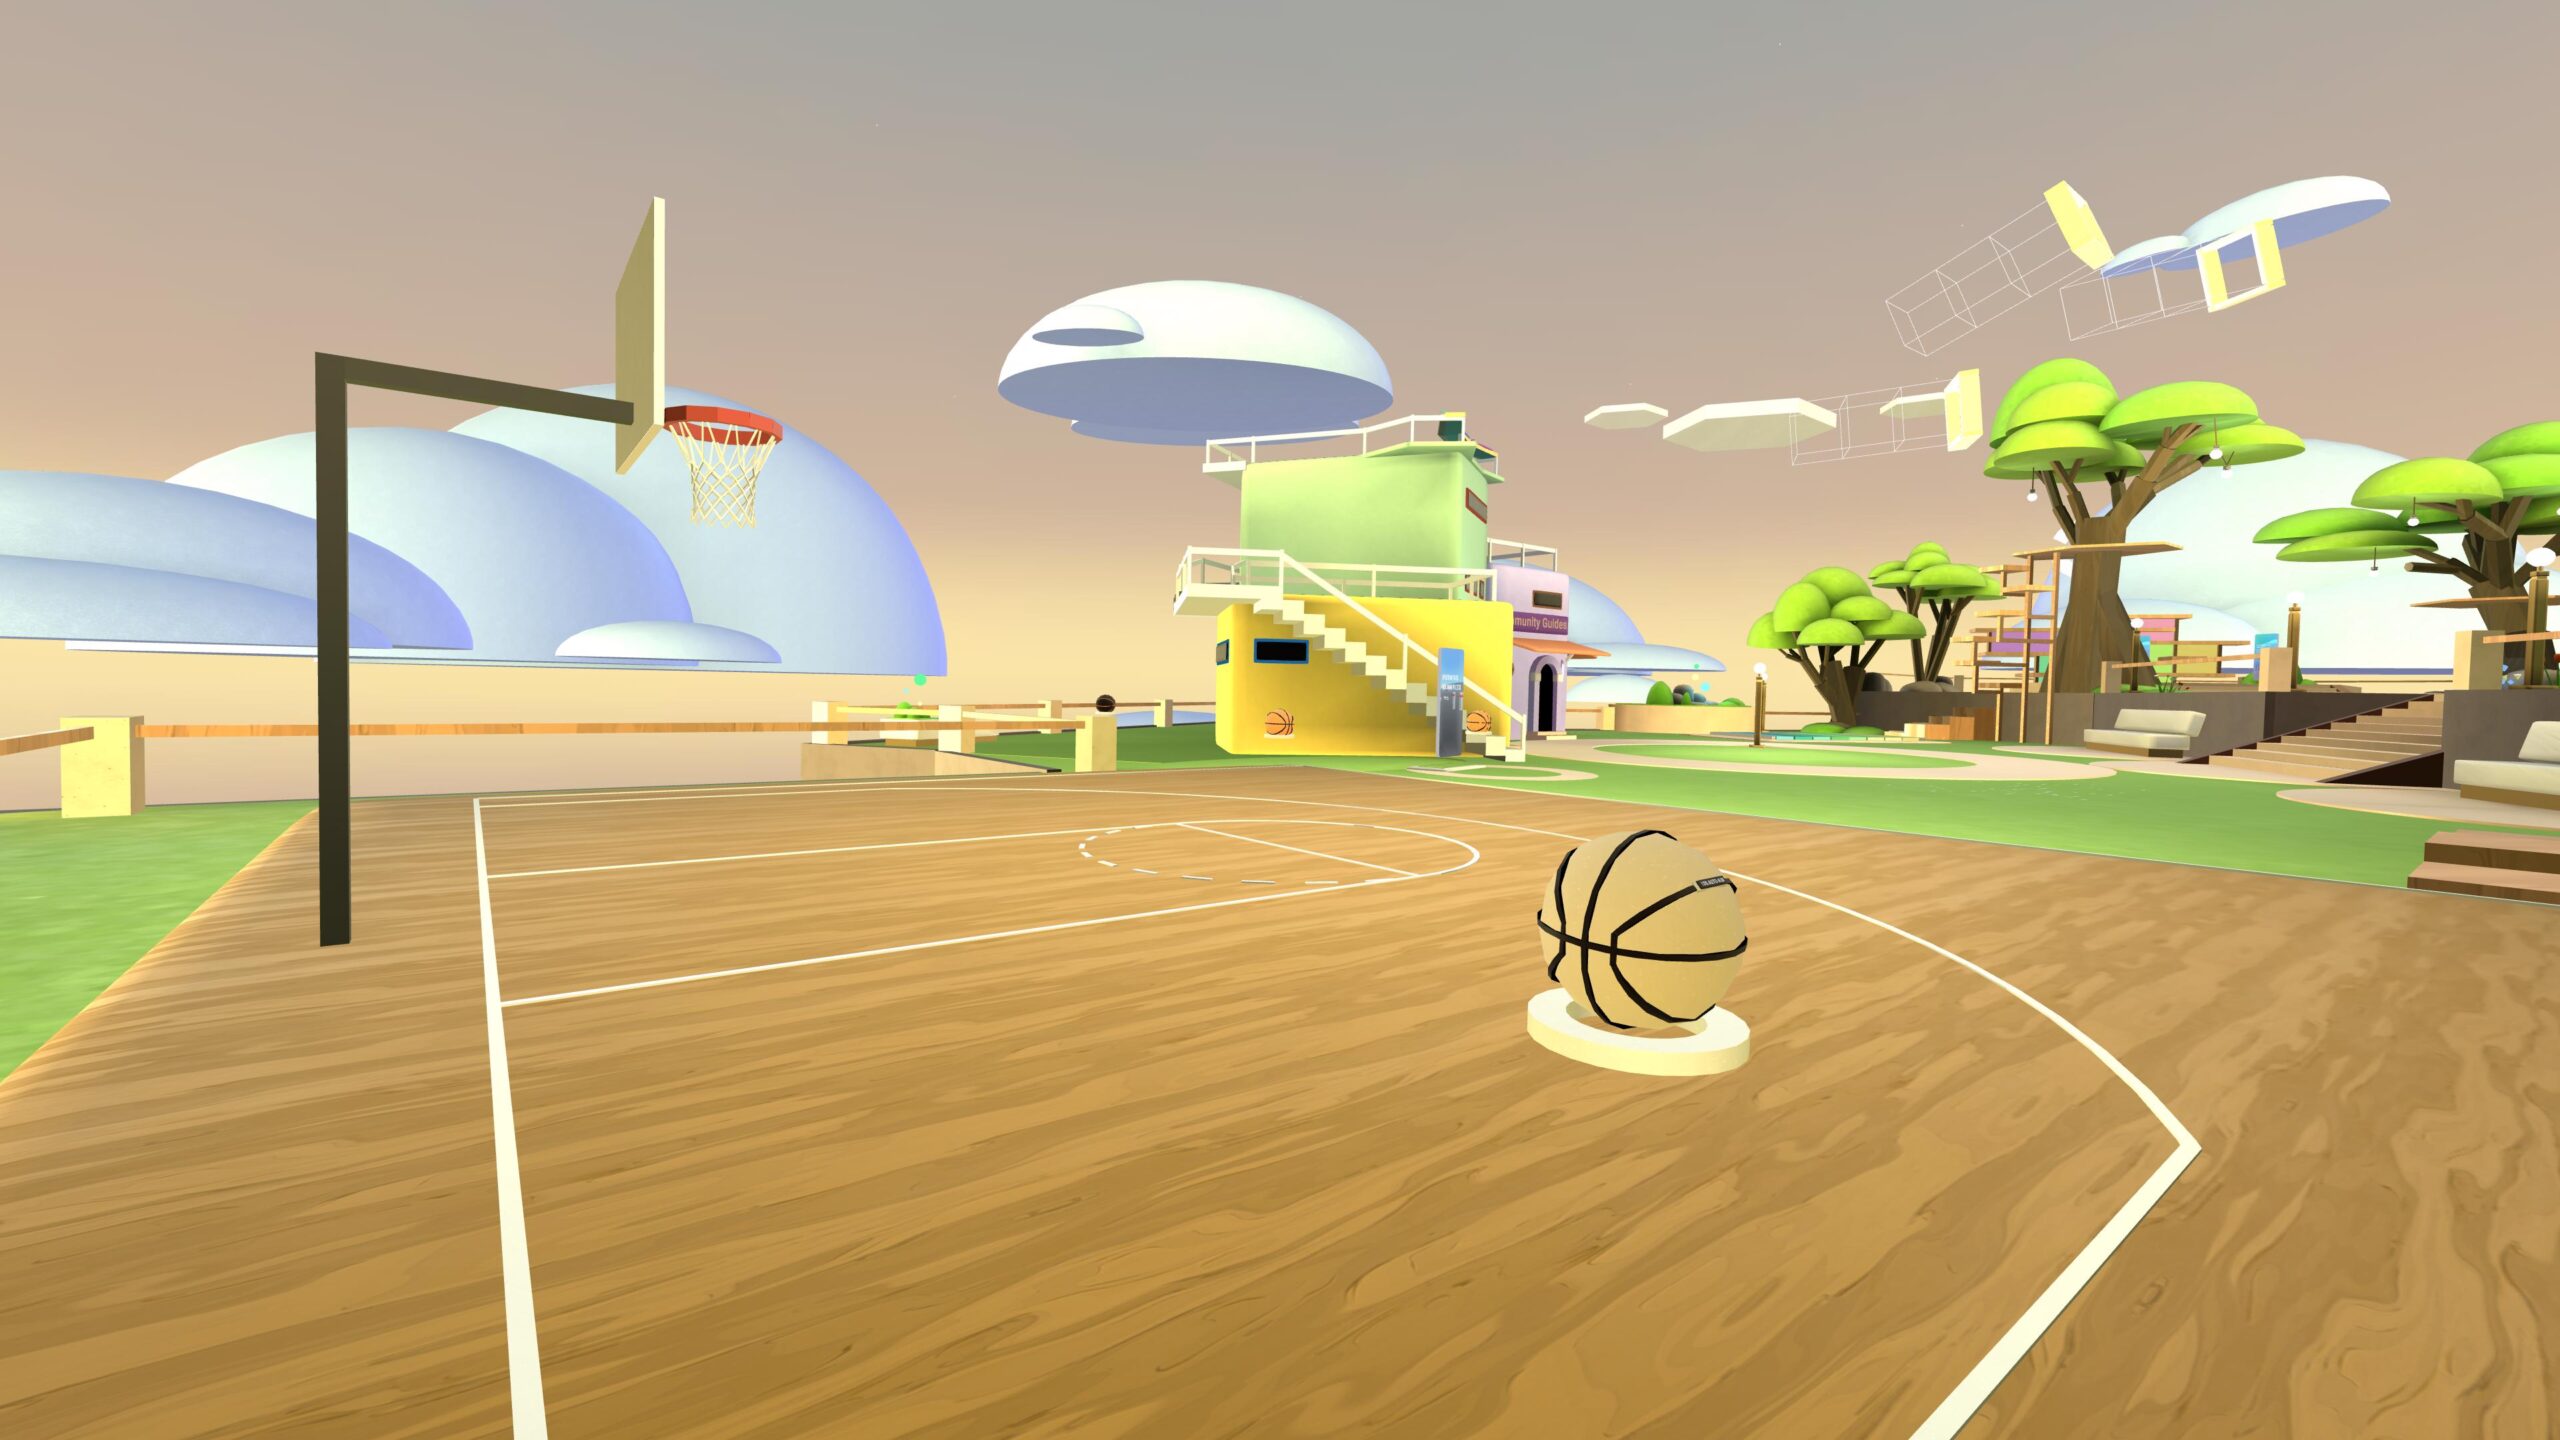 Horizon Worlds scene of a basketball court